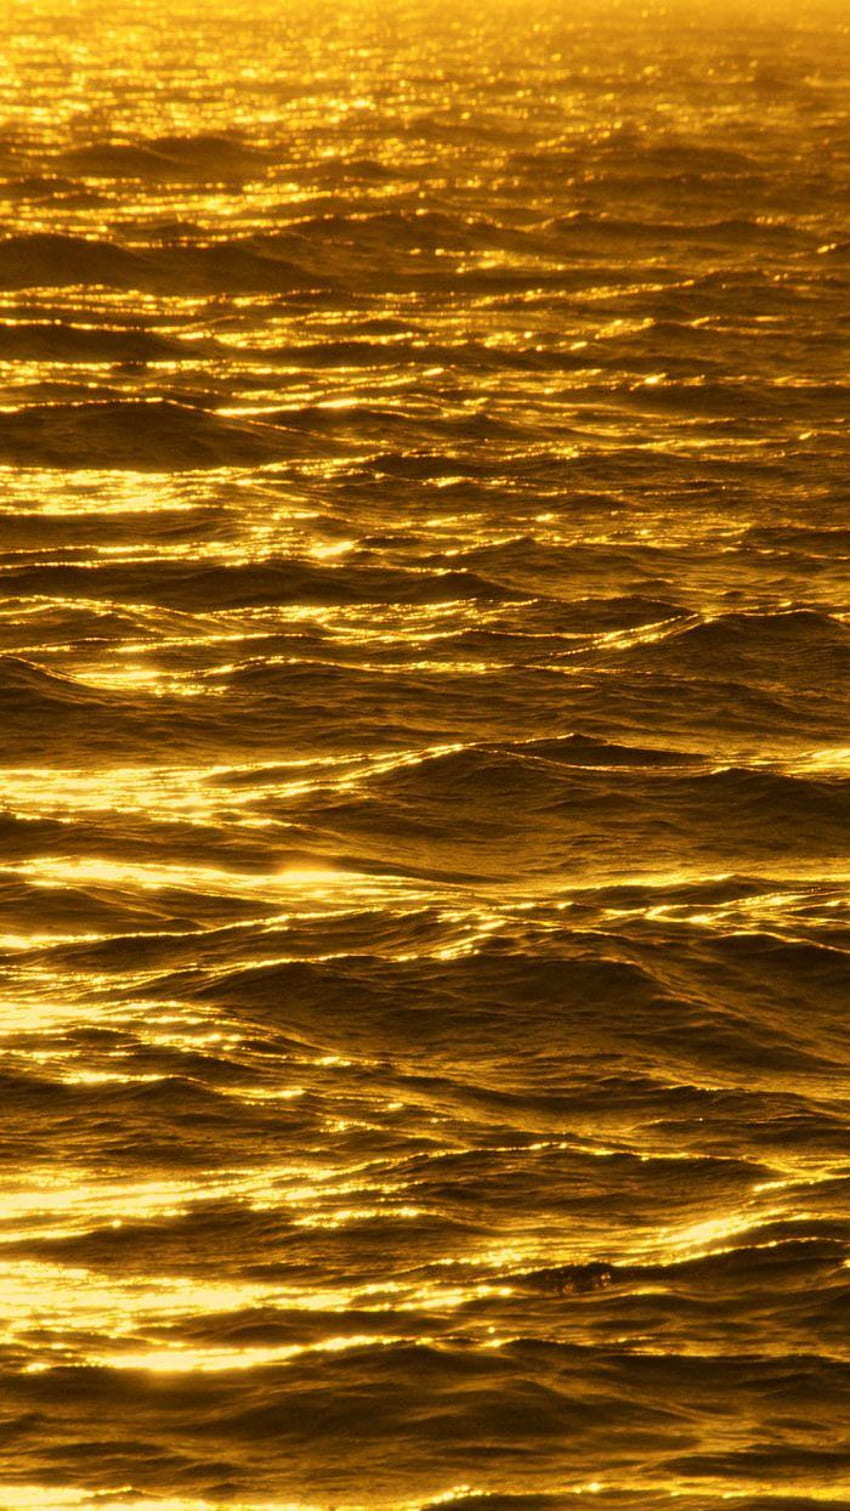 Louis Vuitton Wallpaper • Rose Gold  Louis vuitton iphone wallpaper, Rose  gold wallpaper iphone, Gold wallpaper iphone